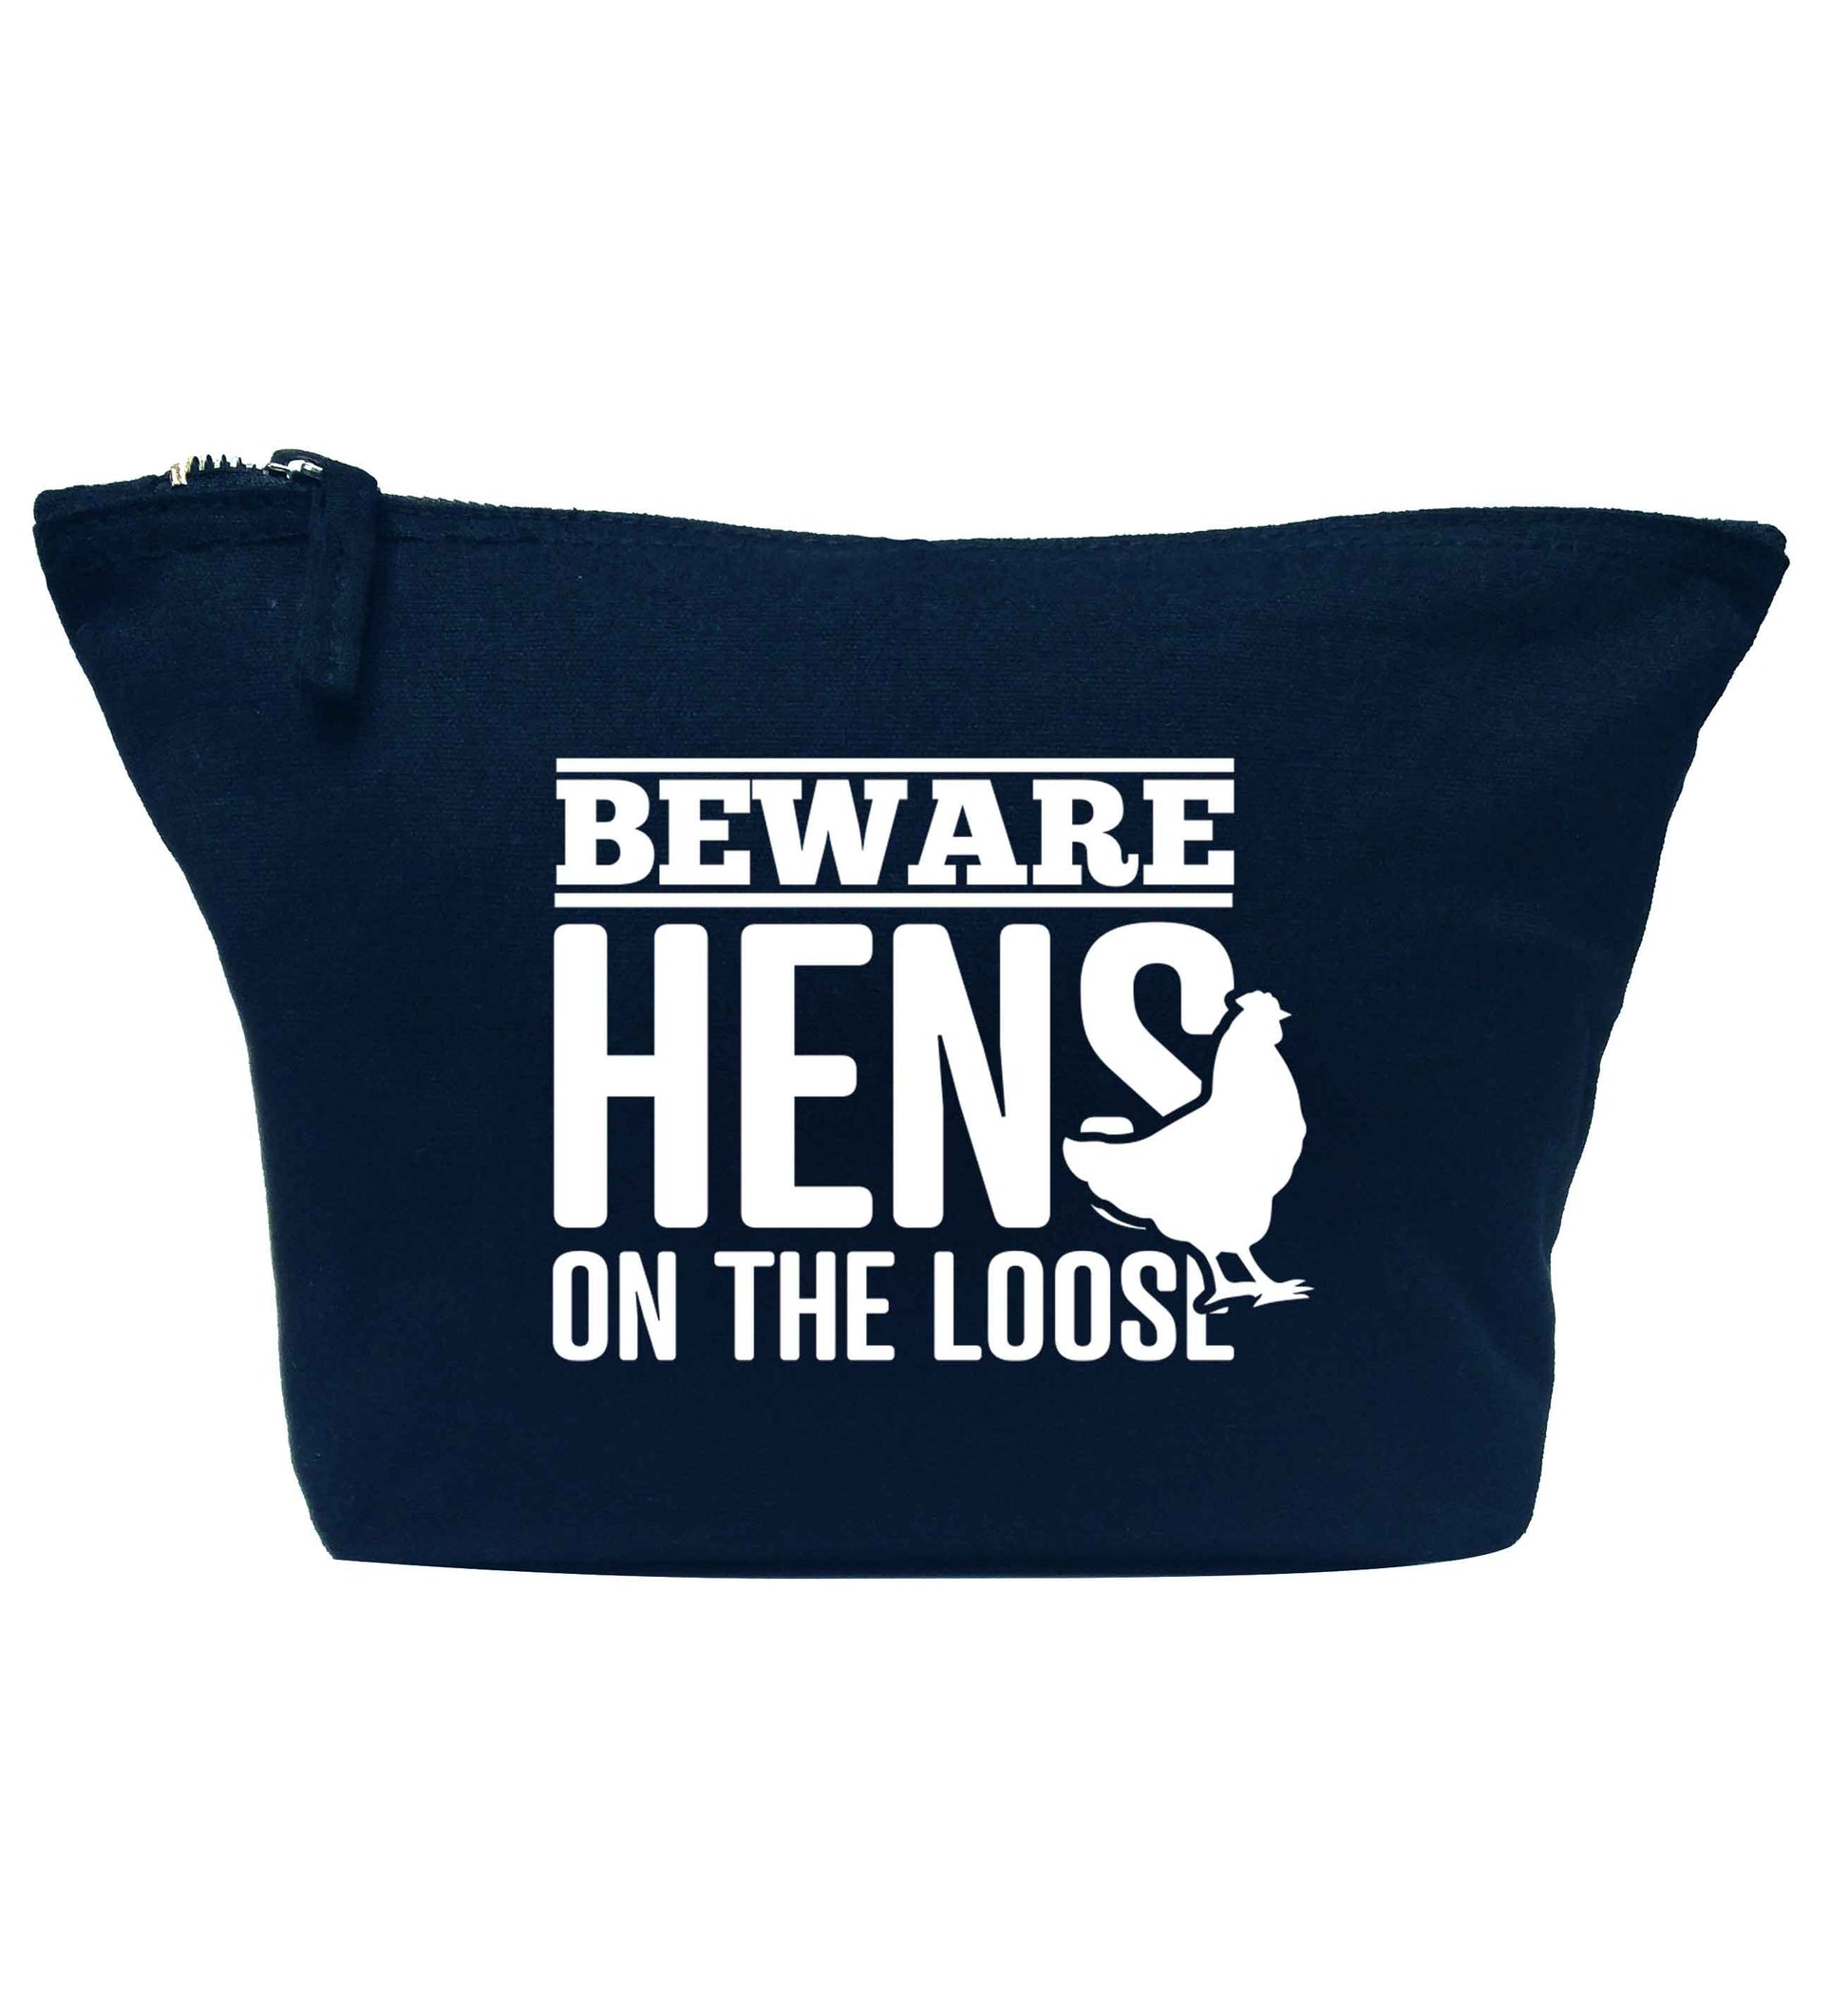 Beware hens on the loose navy makeup bag